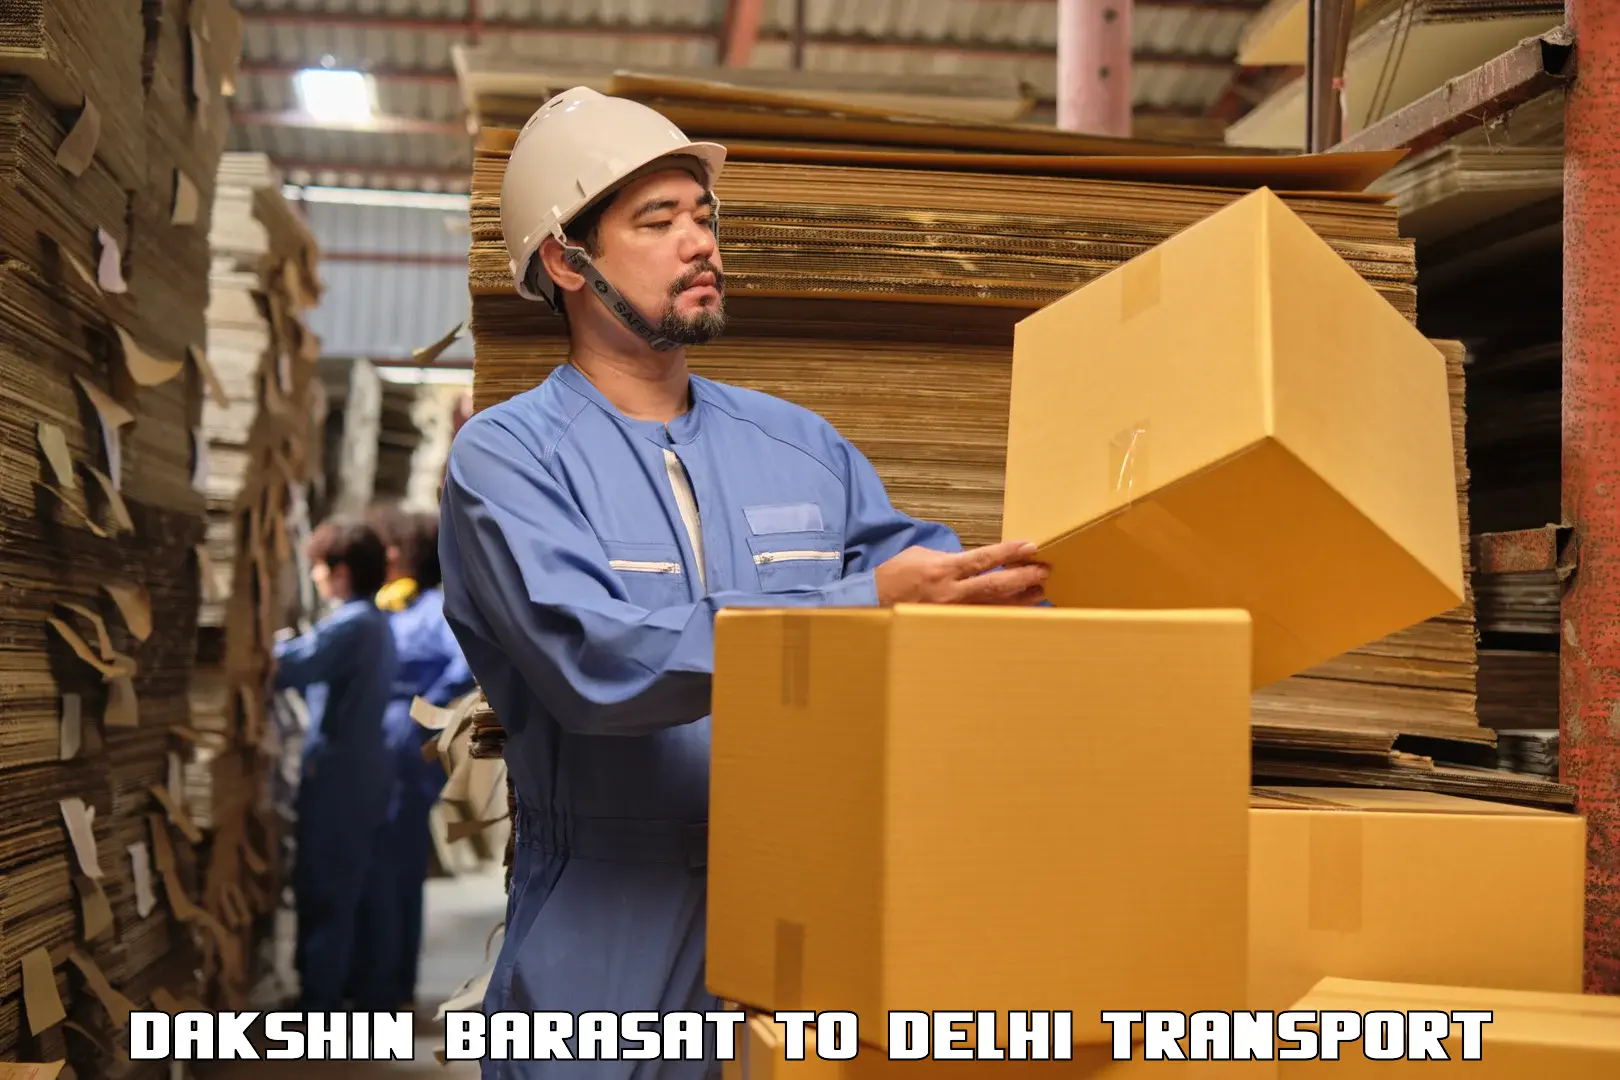 Bike transport service Dakshin Barasat to East Delhi